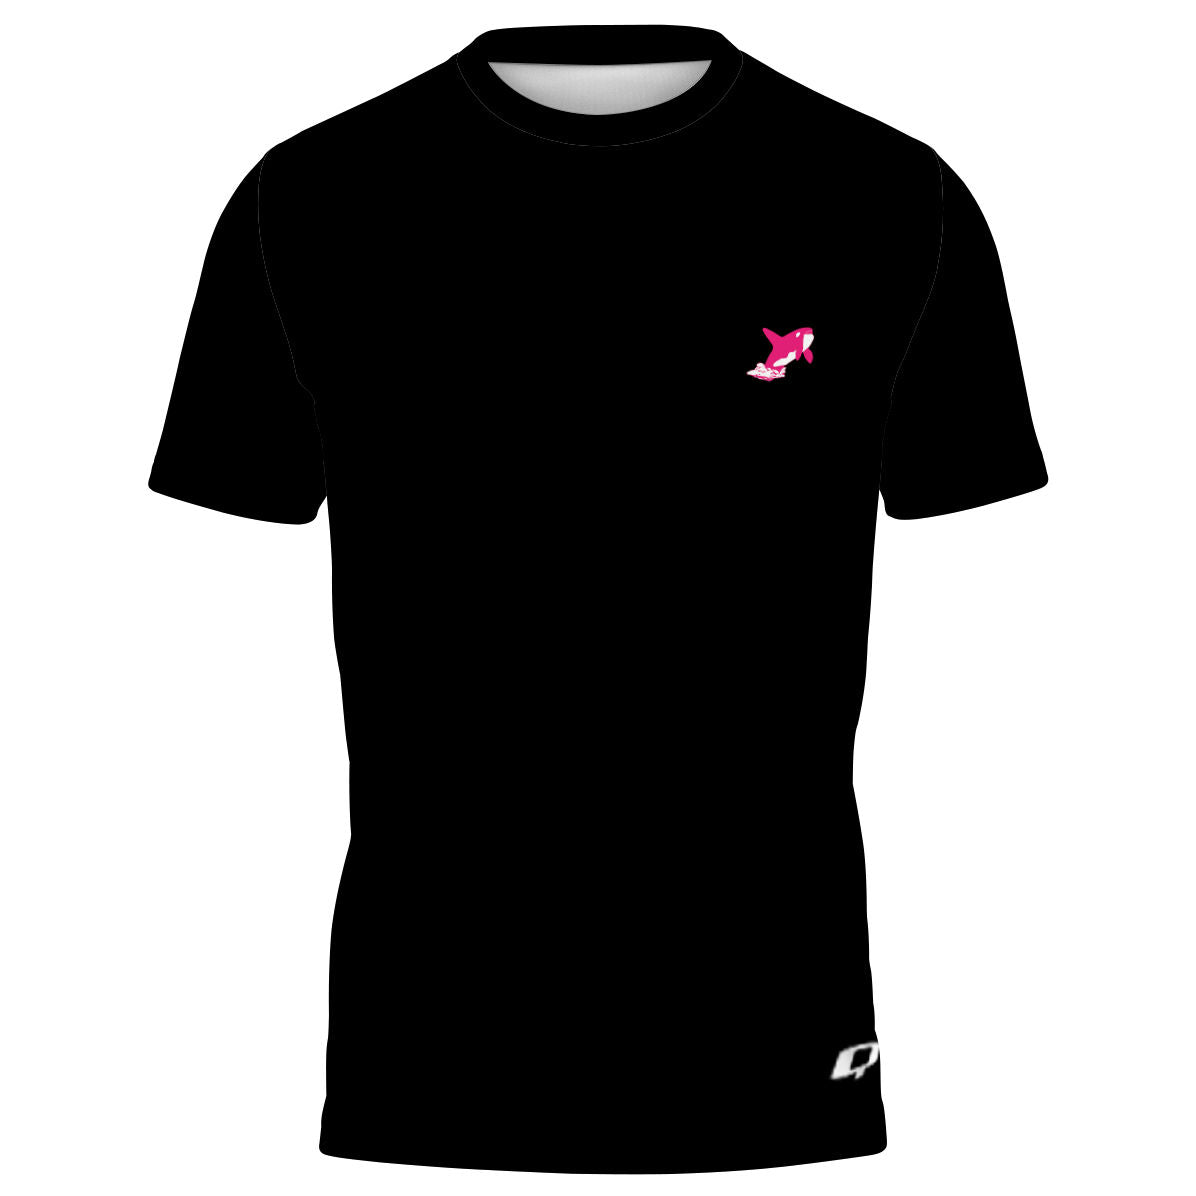 Orca Shirt - Black - Performance Shirt